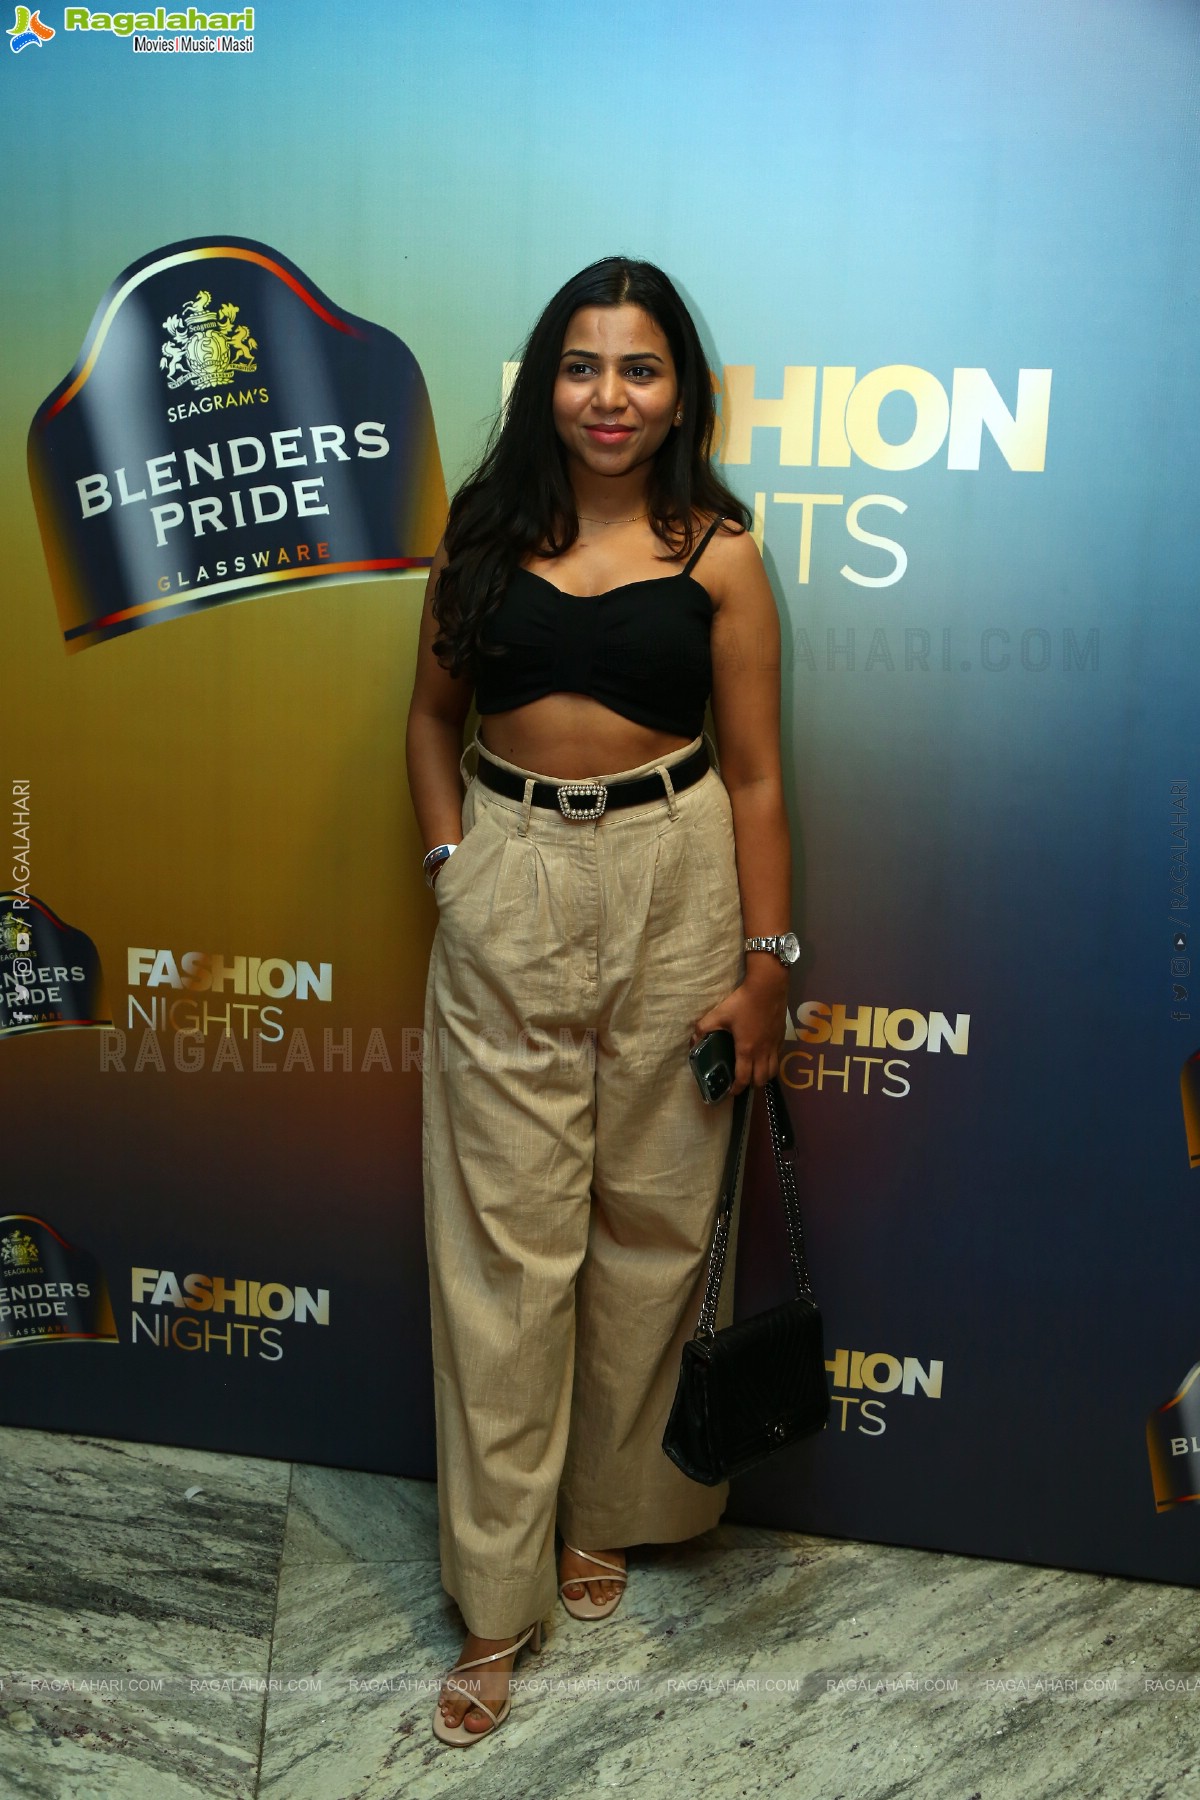 Blenders Pride Fashion Nights at Air Live, Hyderabad